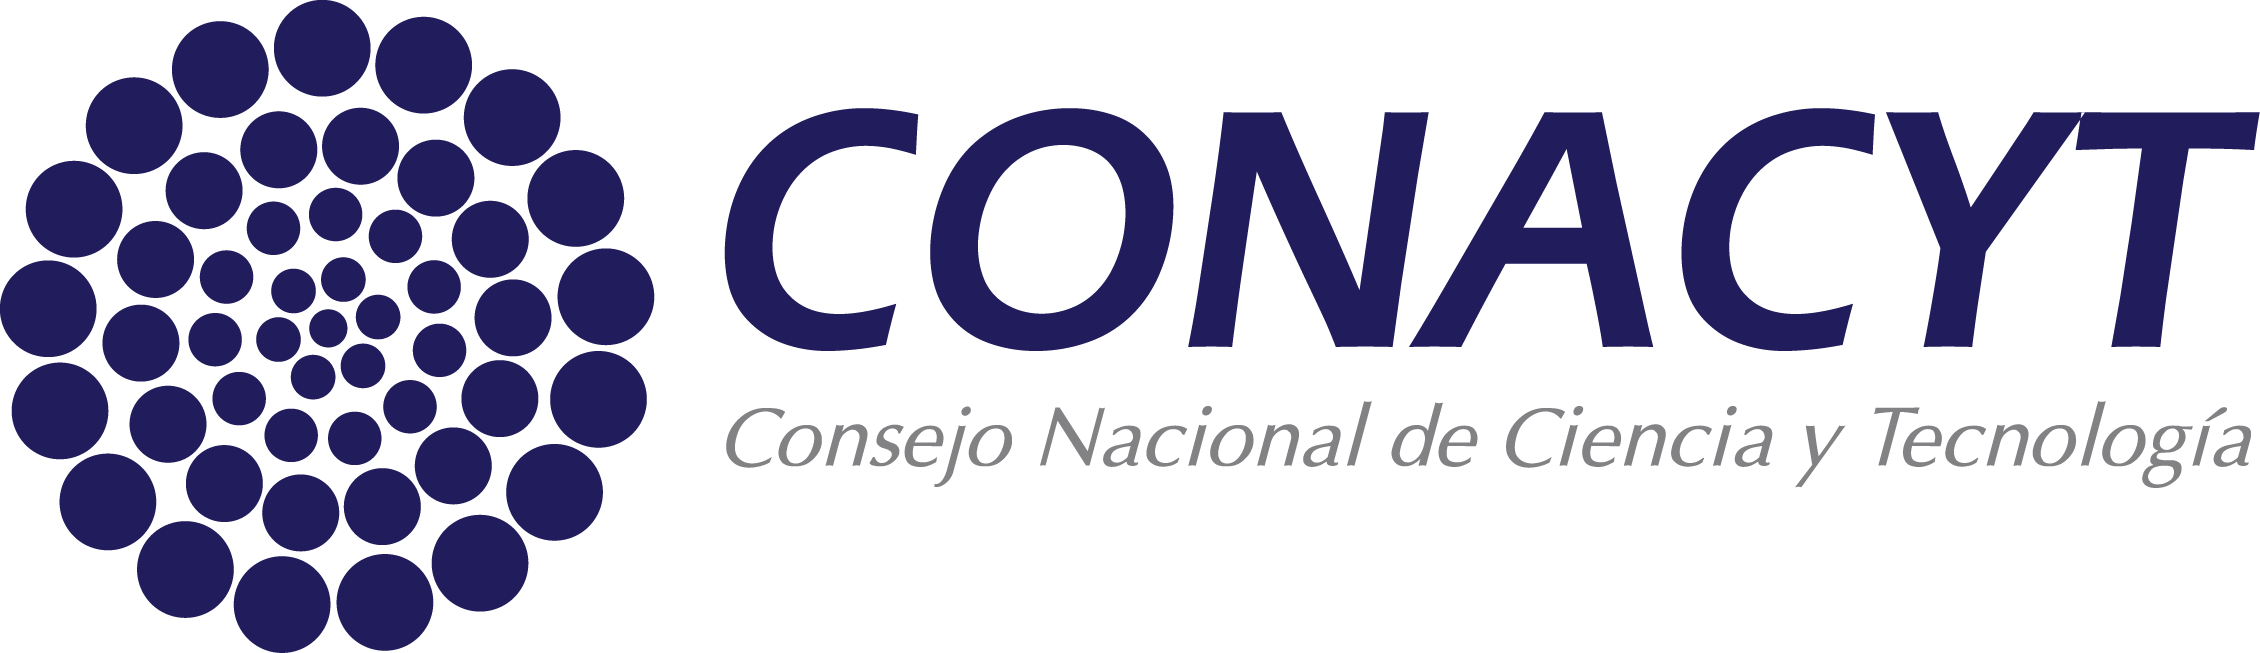 logo-conacyt.png